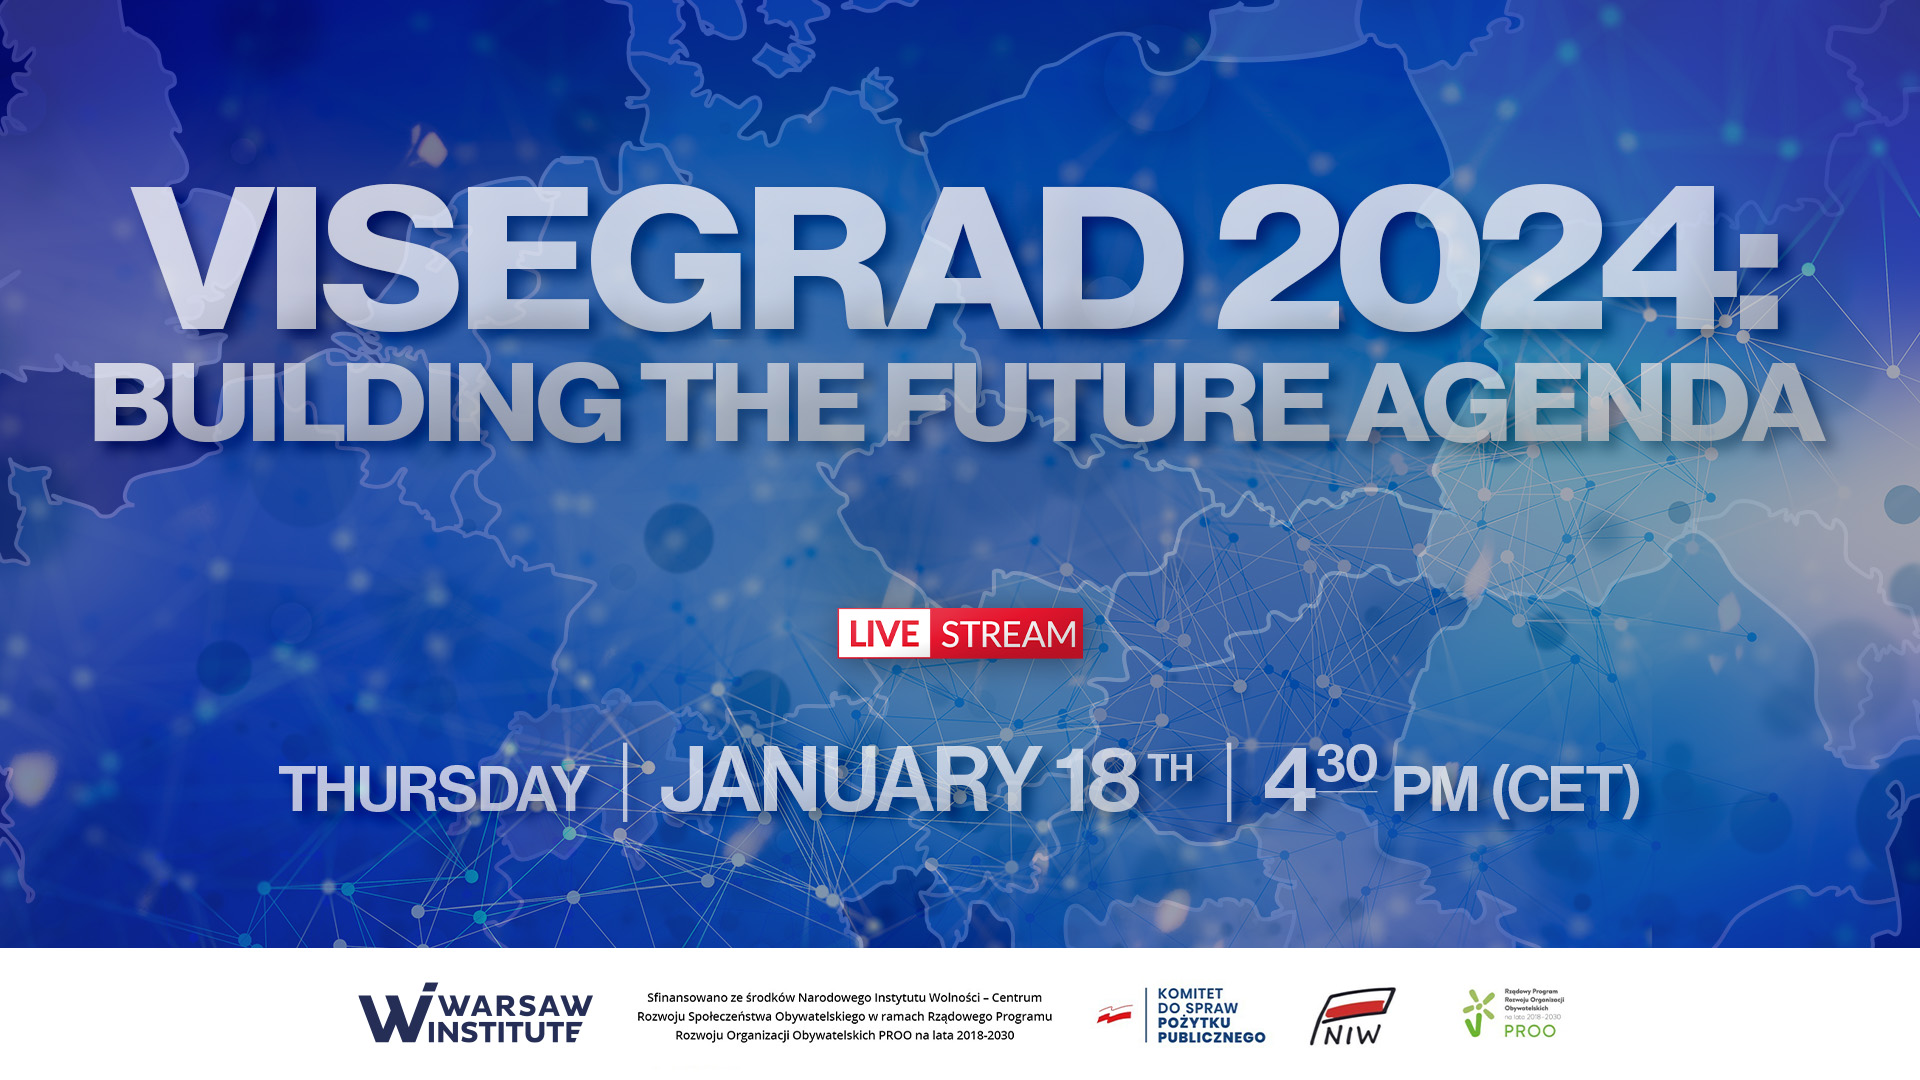 Visegrad 2024: Building the Future Agenda